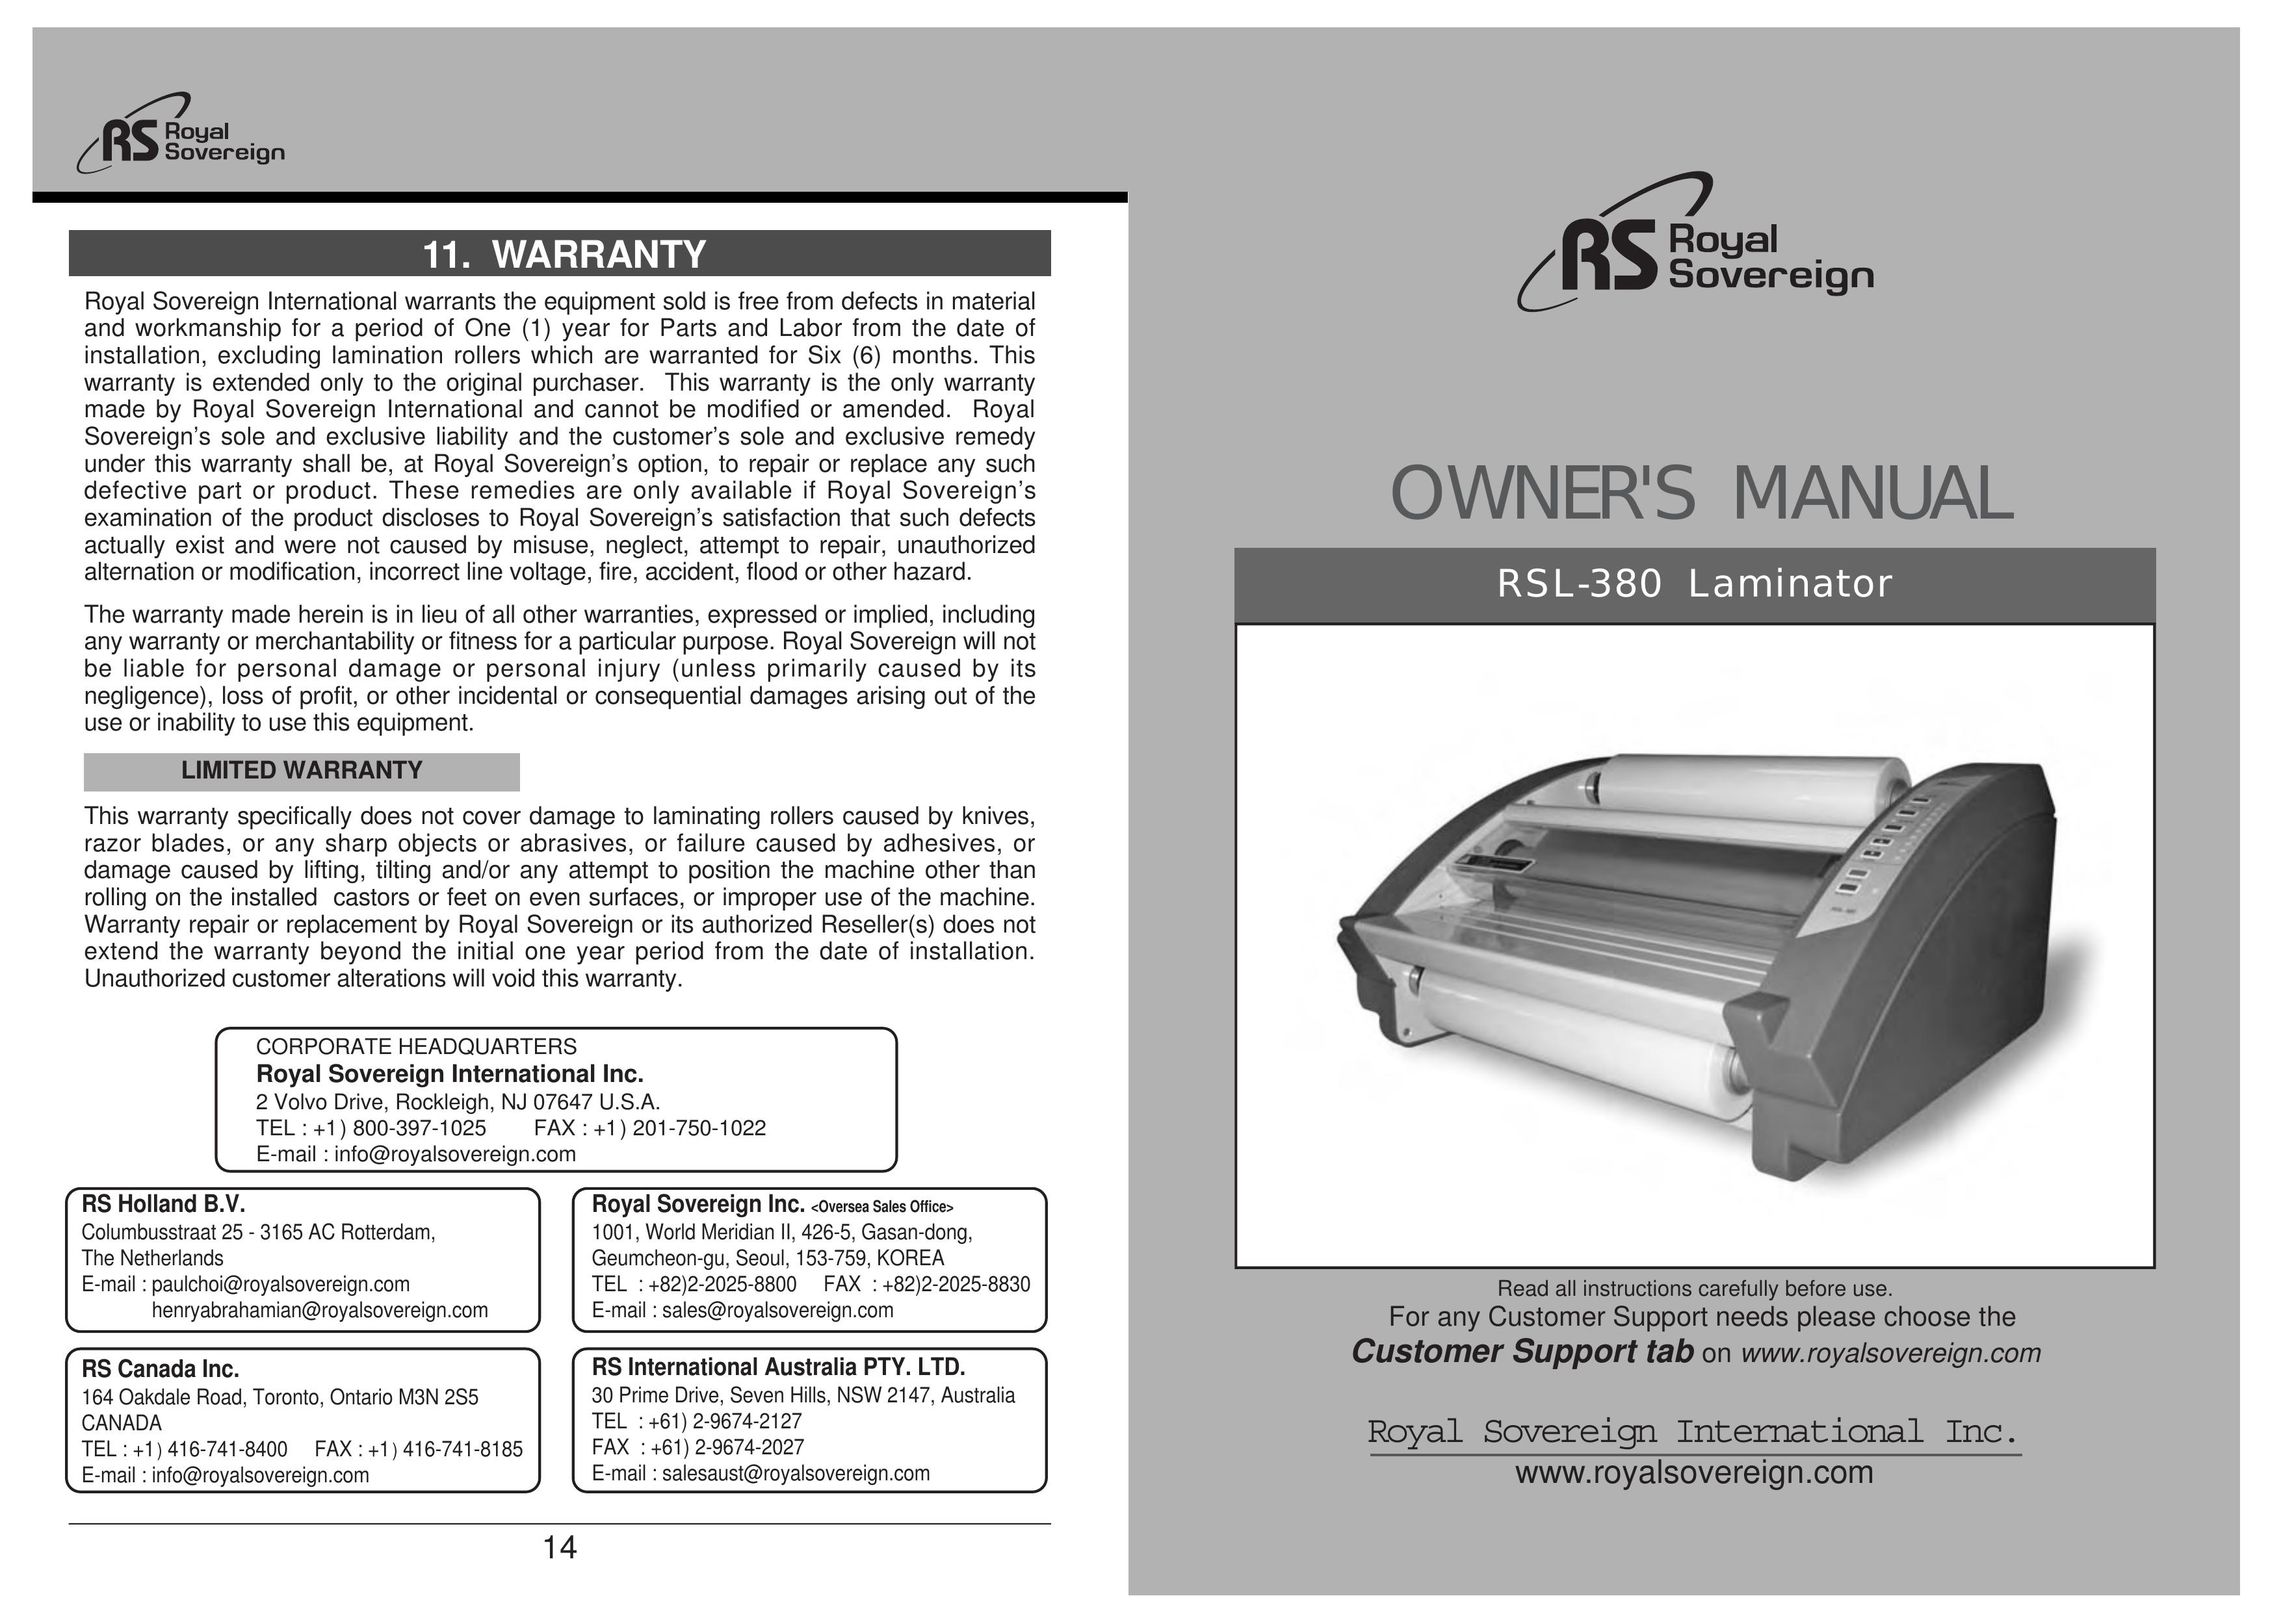 Royal Sovereign RSL-380 Laminator User Manual